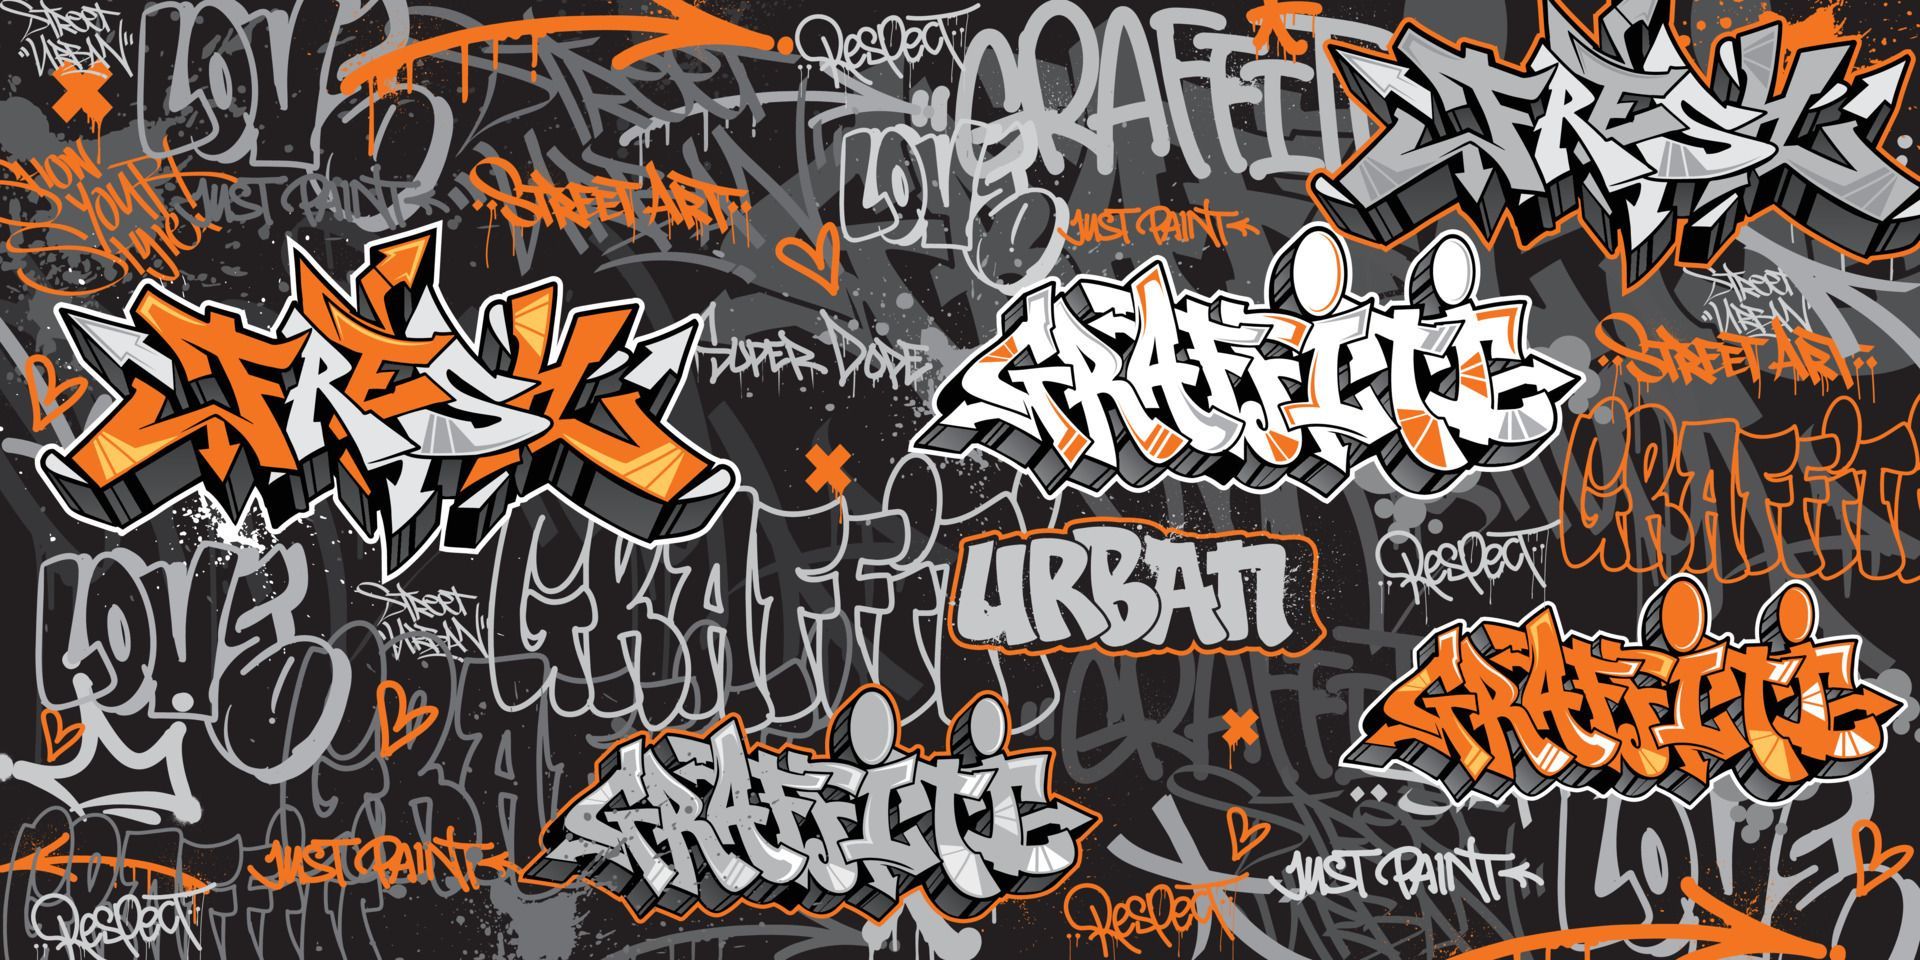 Graffiti wallpaper with various styles of graffiti on a black background - Graffiti